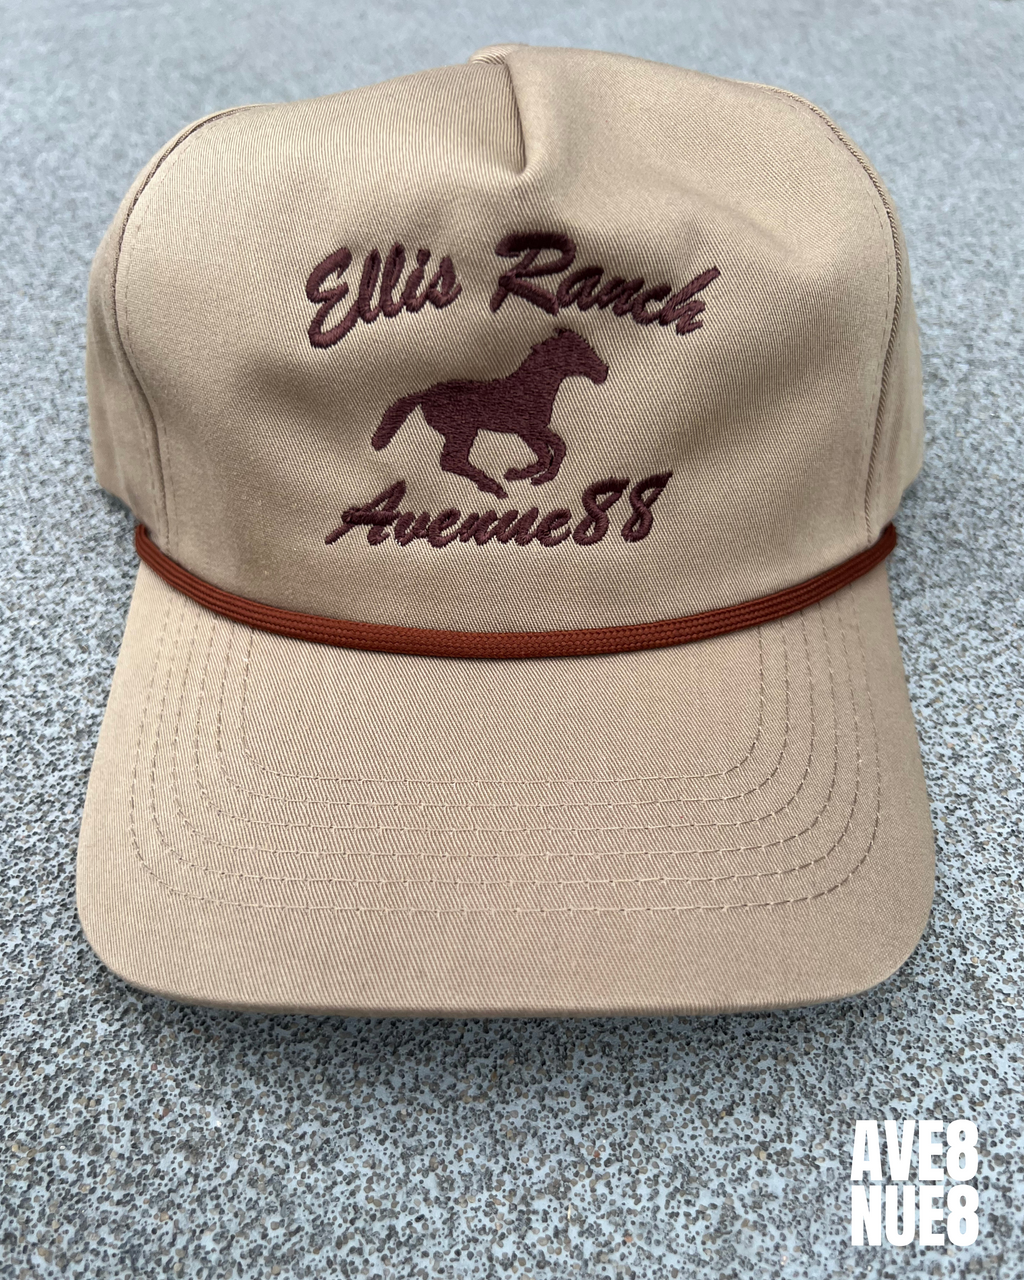 Khaki/brown unstructured Ellis ranch hat